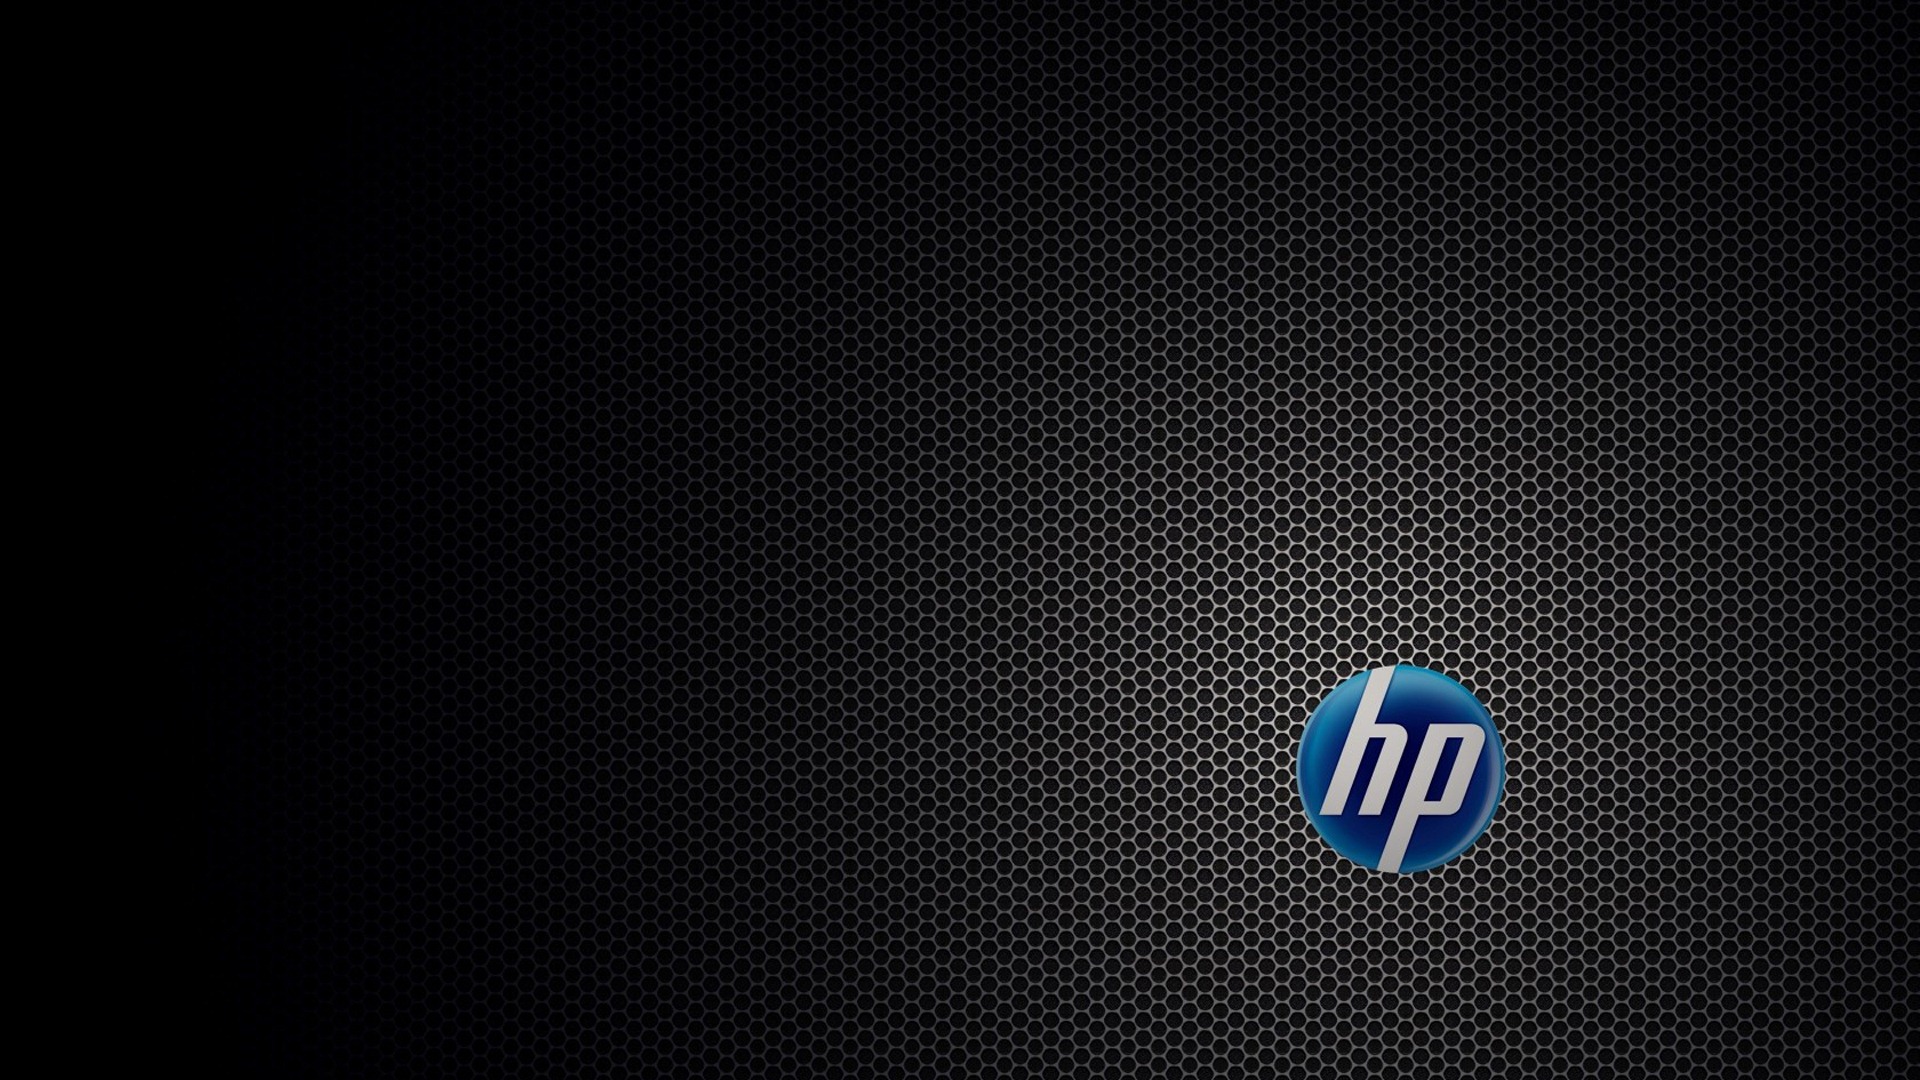 HP 4K Wallpaper